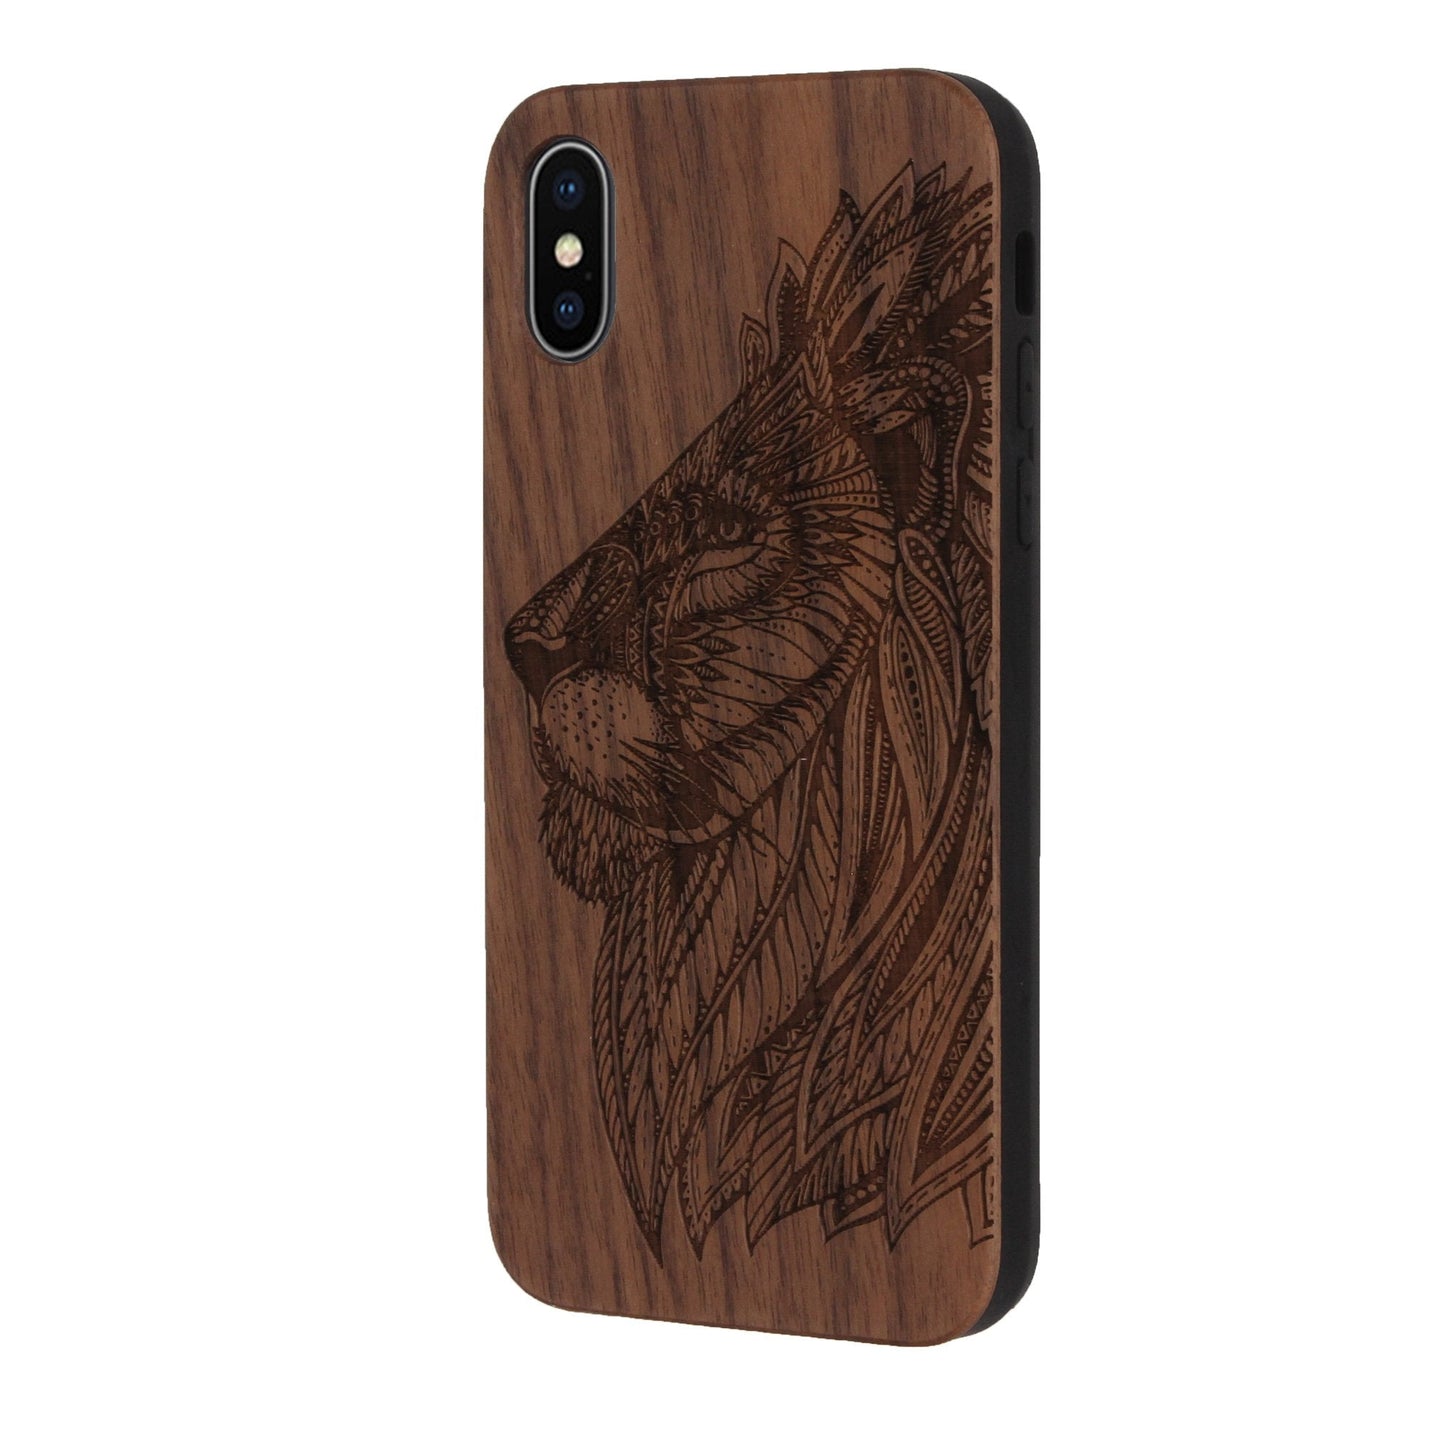 Walnut lion Eden case for iPhone XS Max